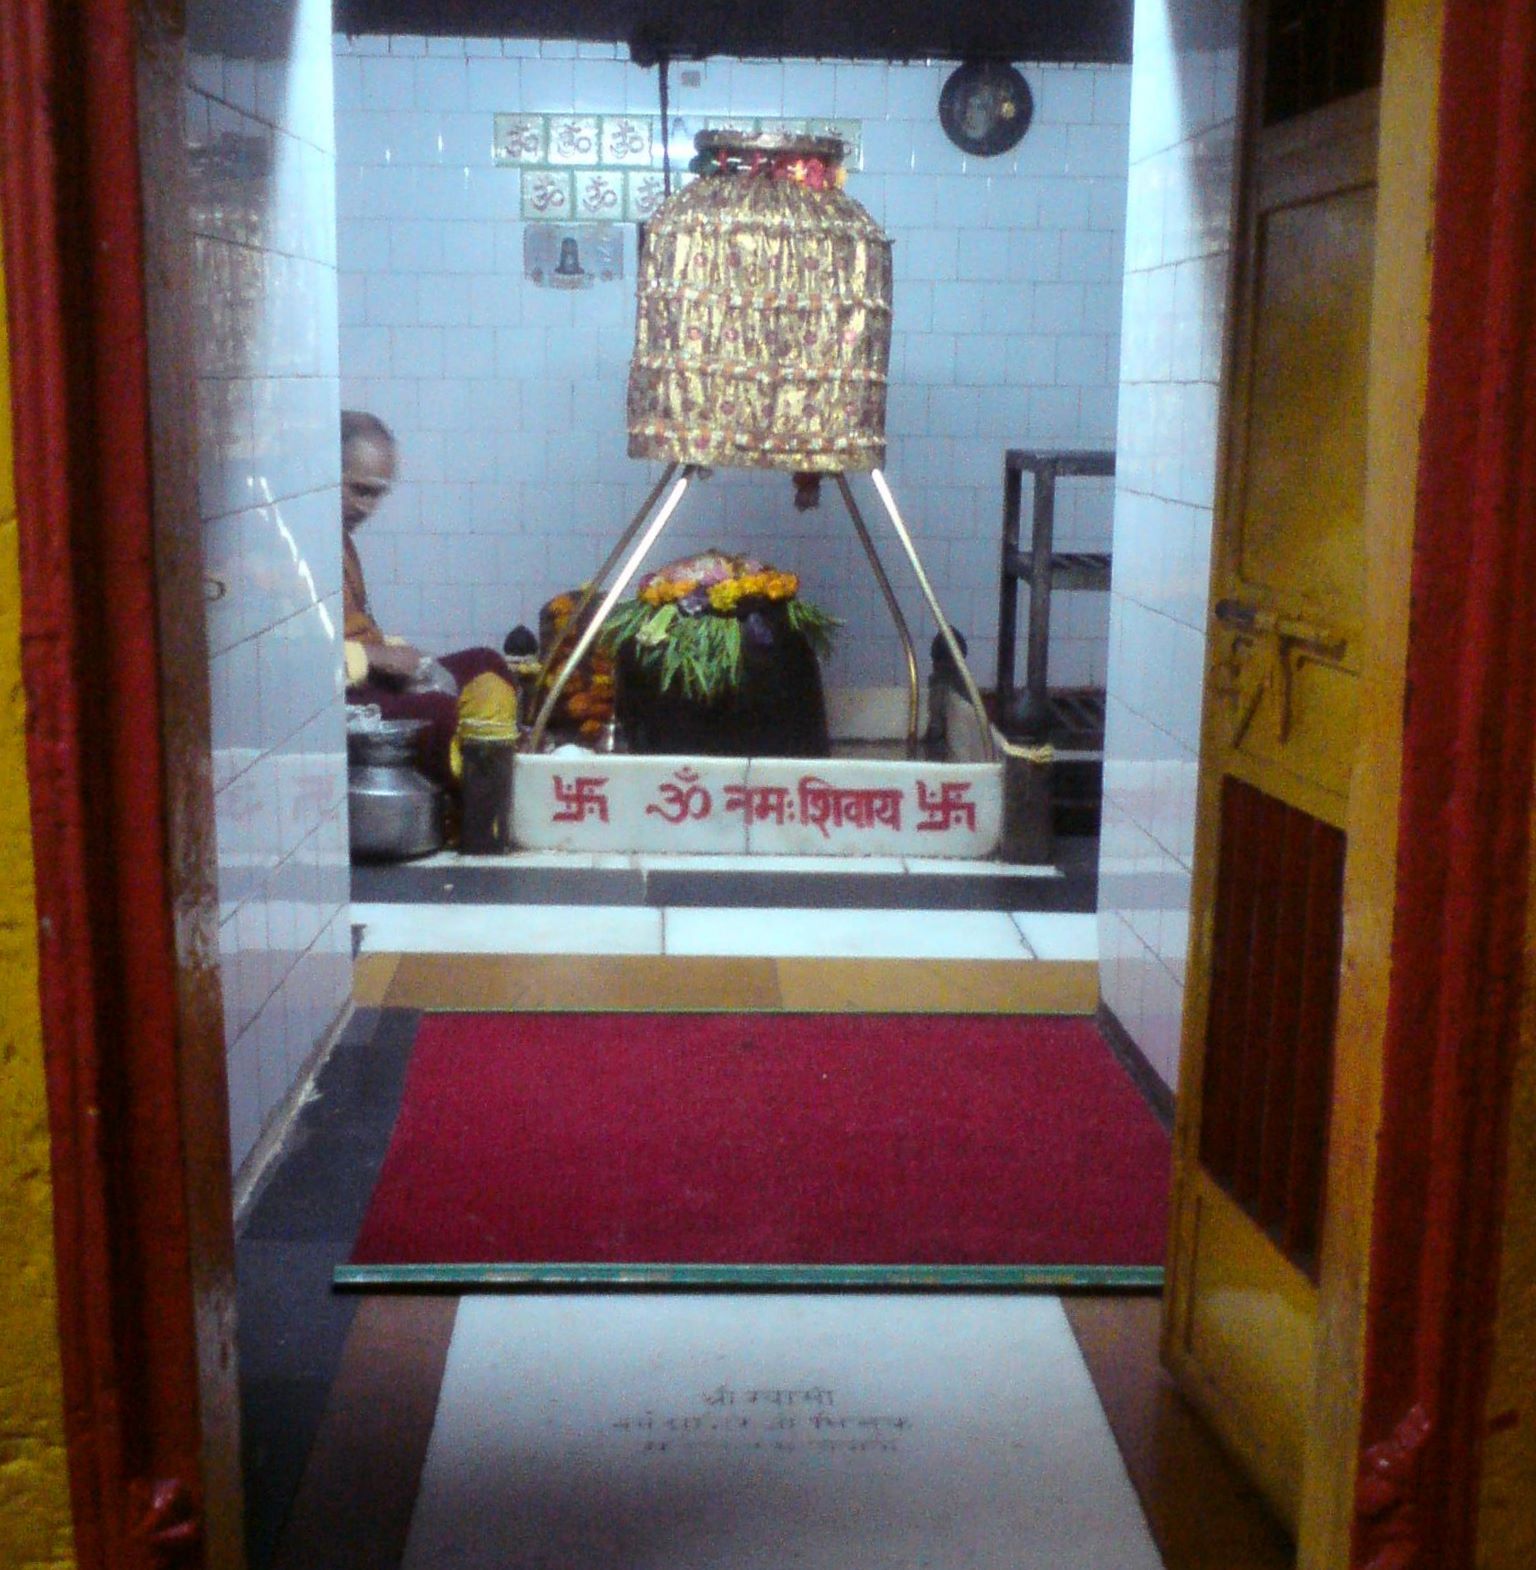 The Shivling at the Kashi Vishwanath Temple of Uttarkashi